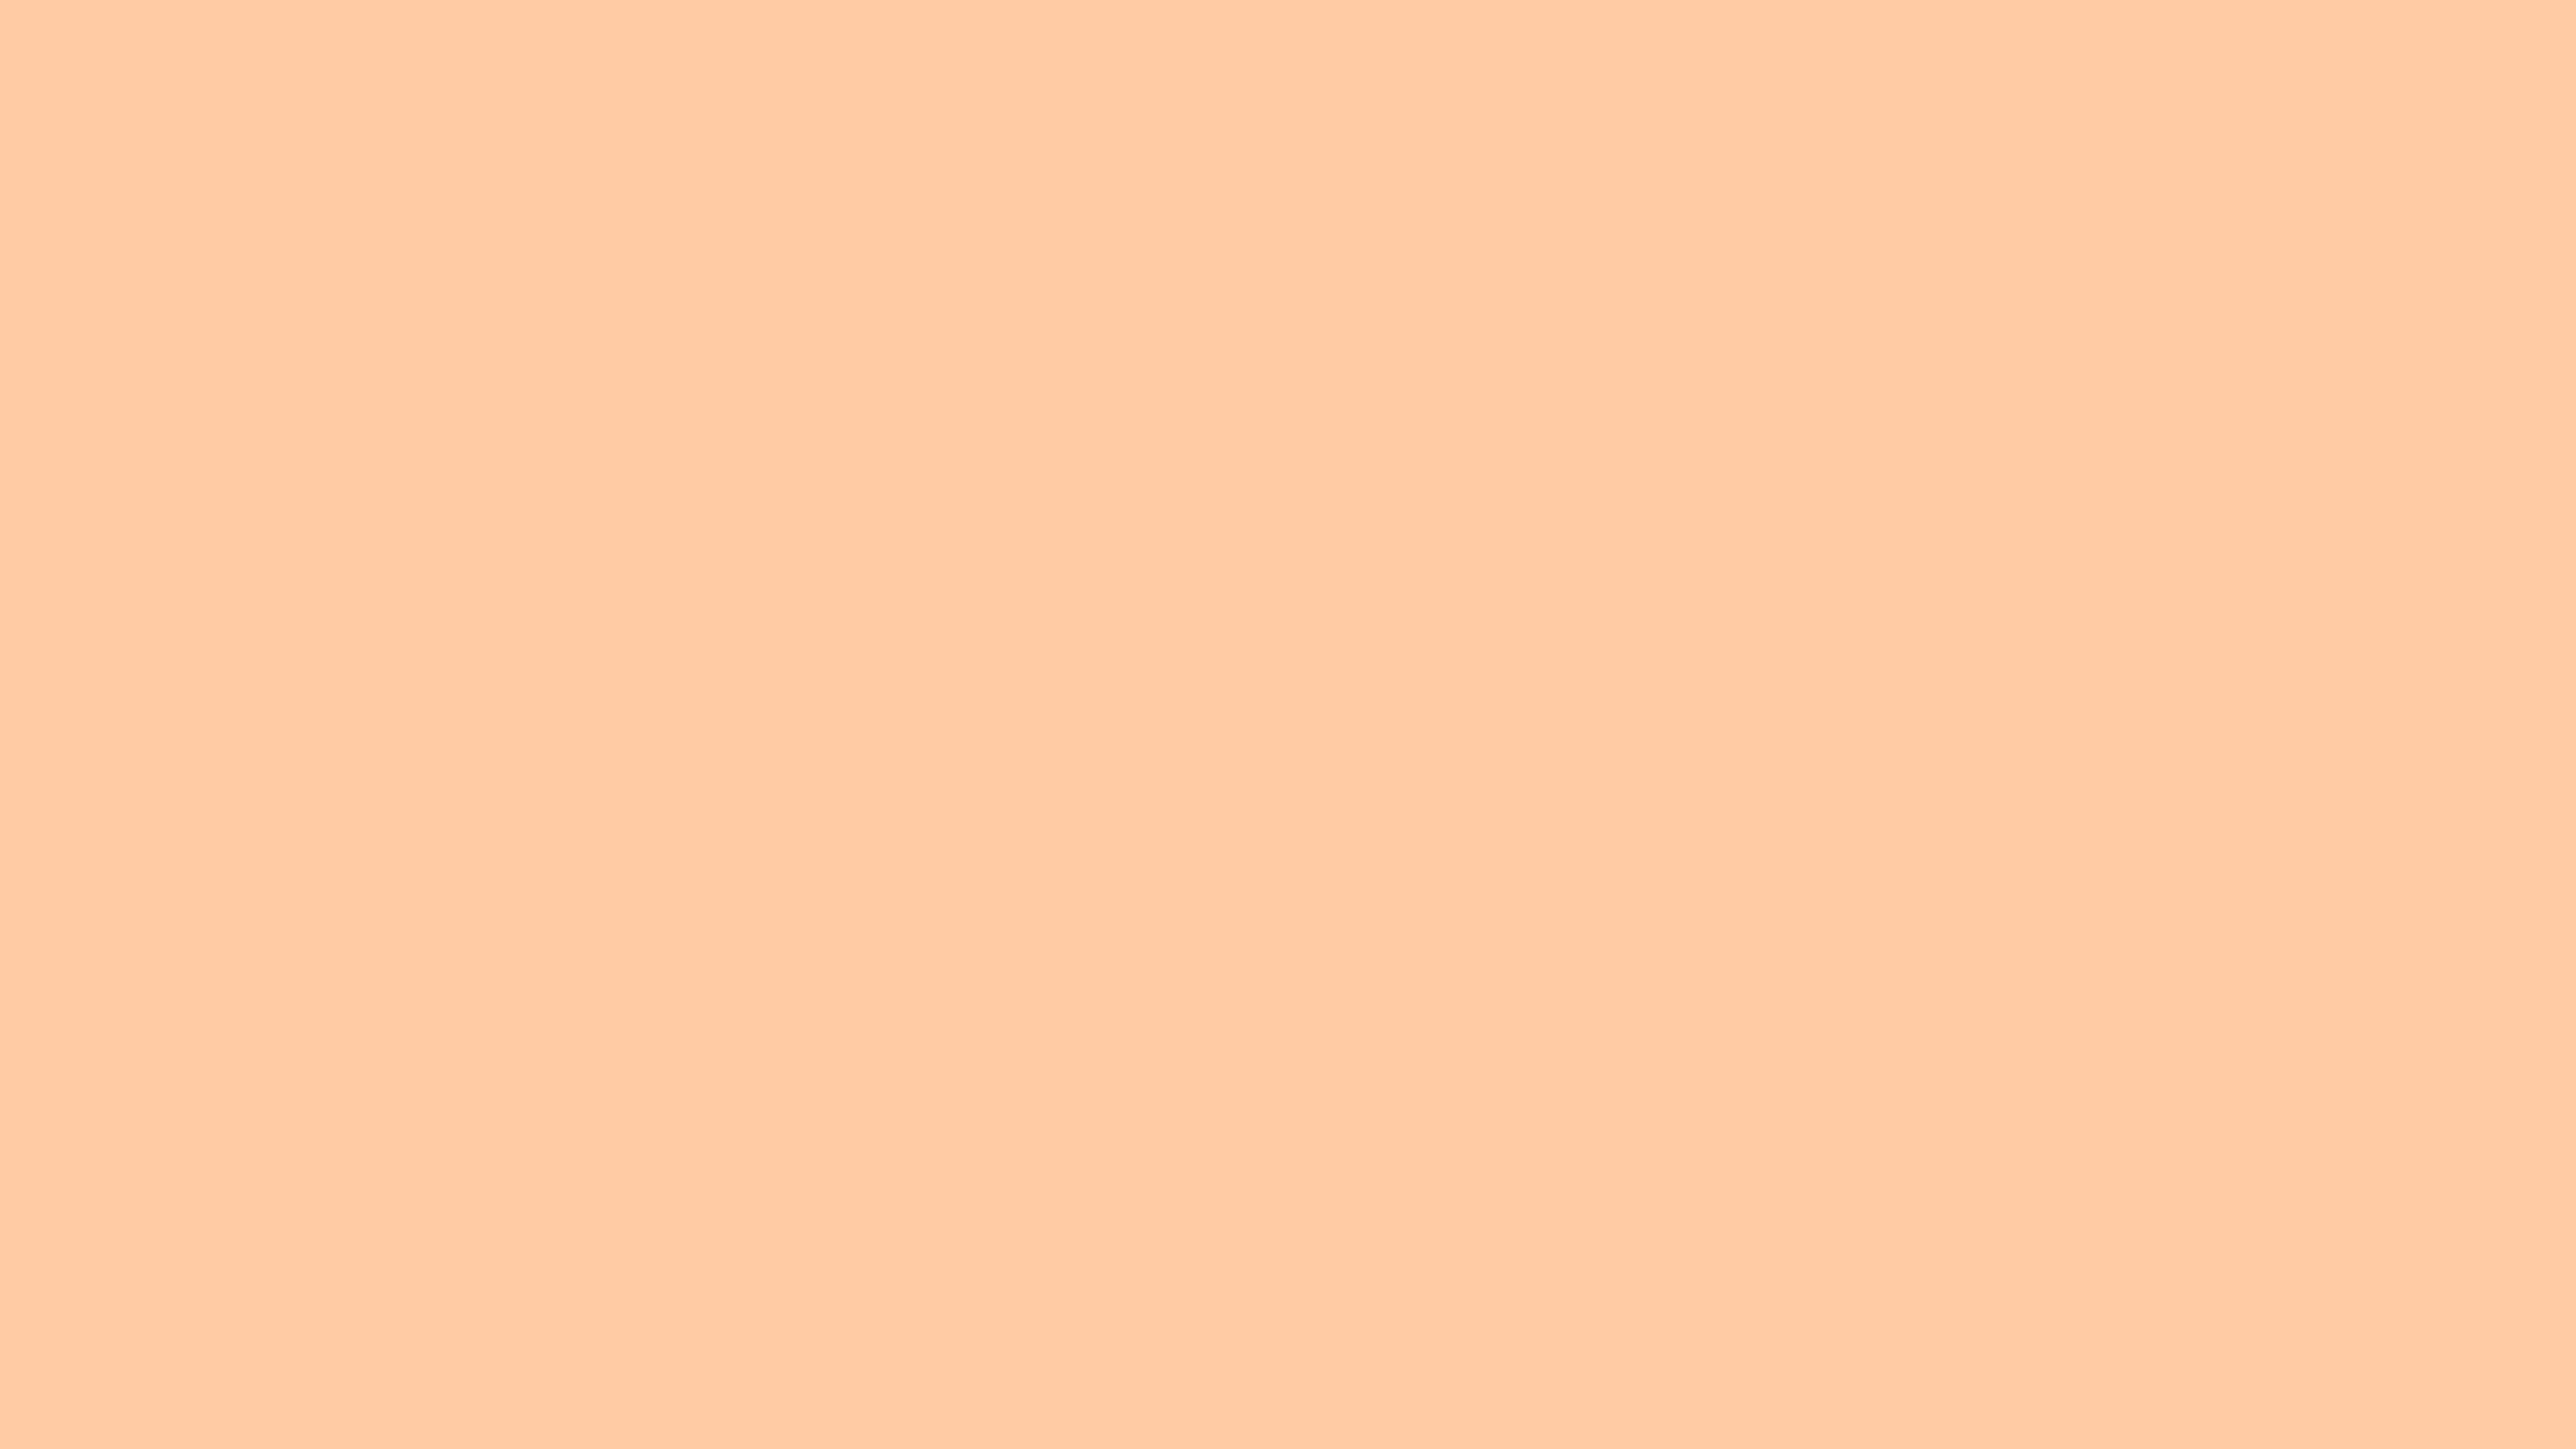 4096x2304 Peach Crayola Solid Color Background